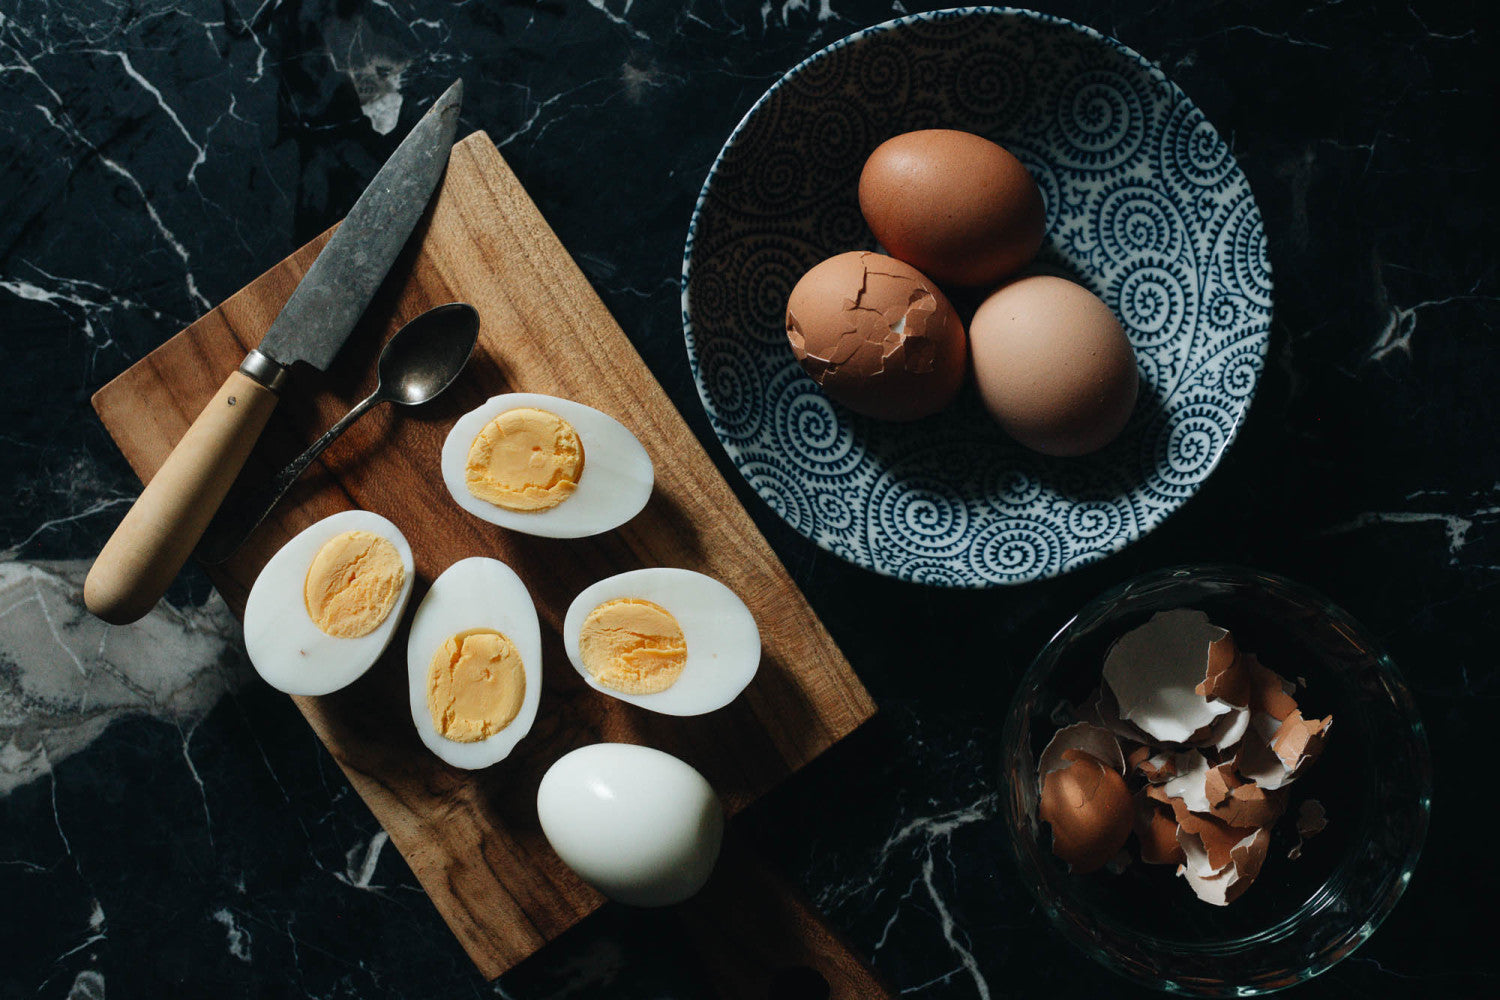 What advantages do masculine eggs have?